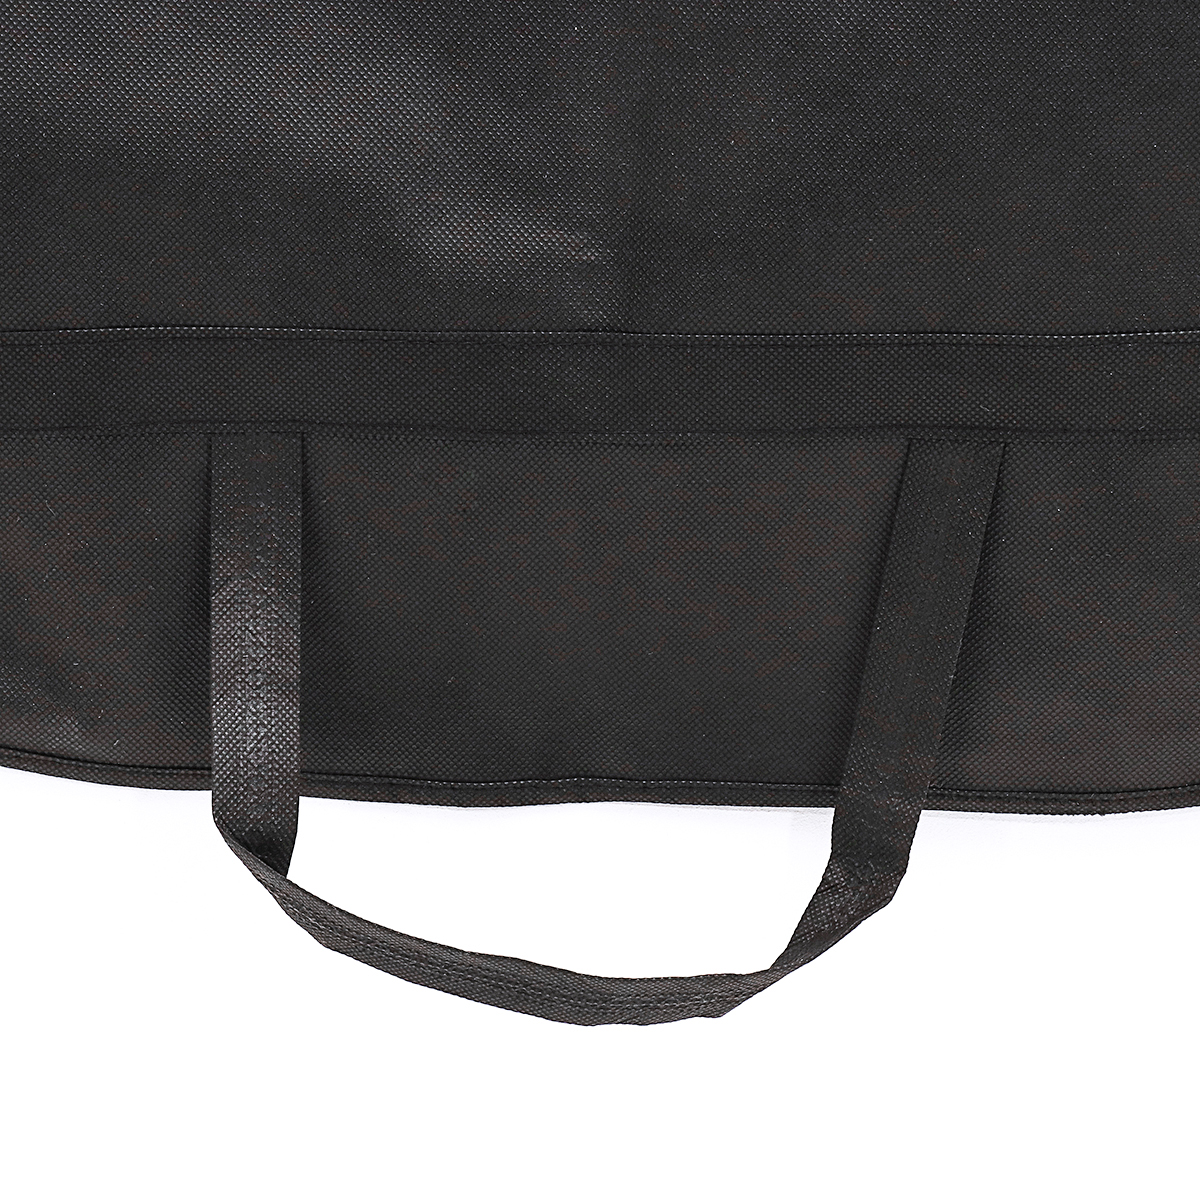 Black-Suit-Dress-Coat-Garment-Storage-Travel-Carrier-Bag-Cover-Hanger-Protector-Clothes-Cover-1395130